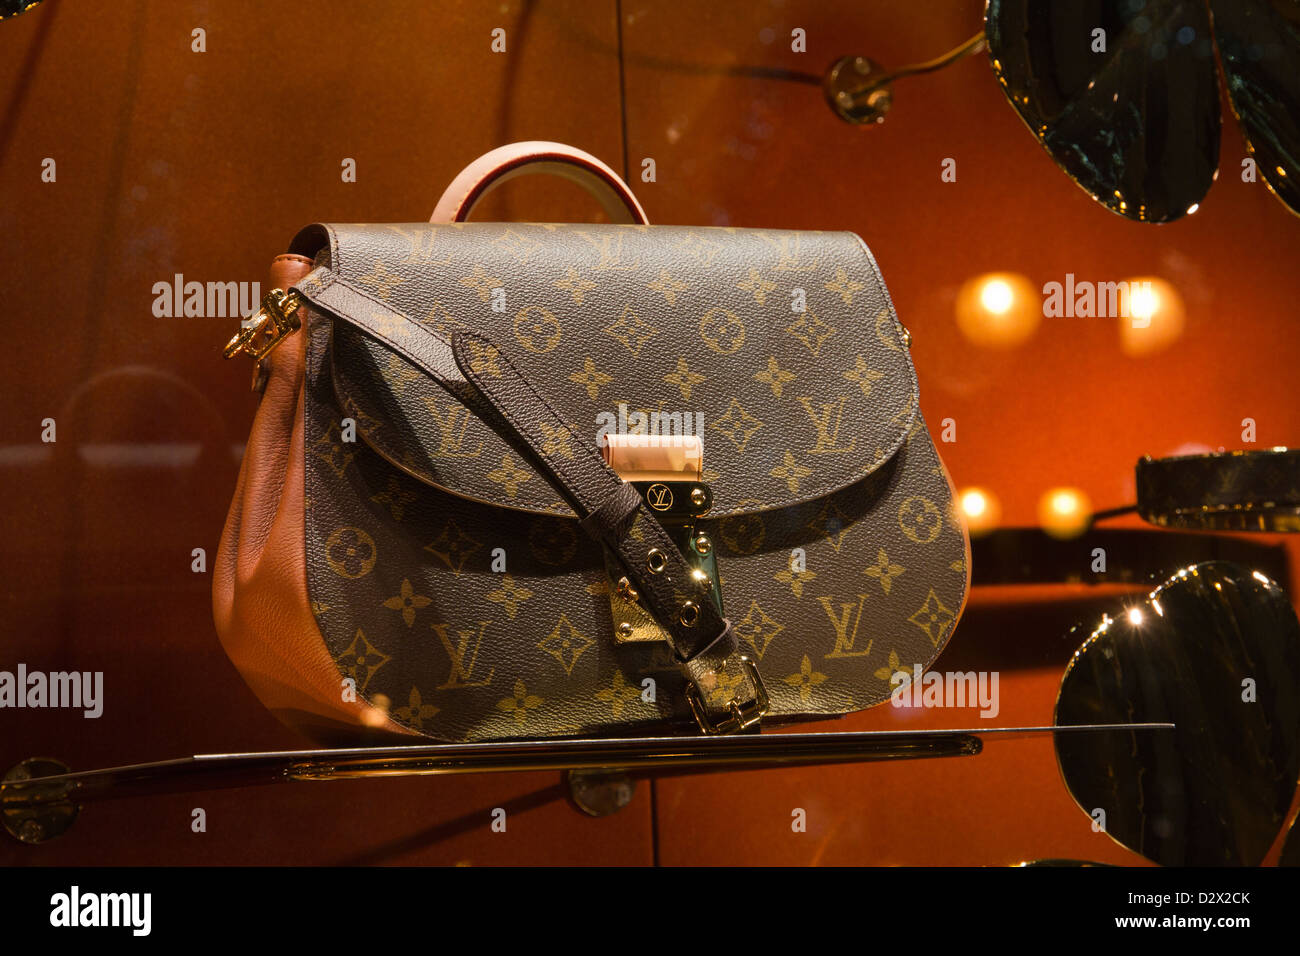 1,263 Louis Vuitton Bag Stock Photos - Free & Royalty-Free Stock Photos  from Dreamstime